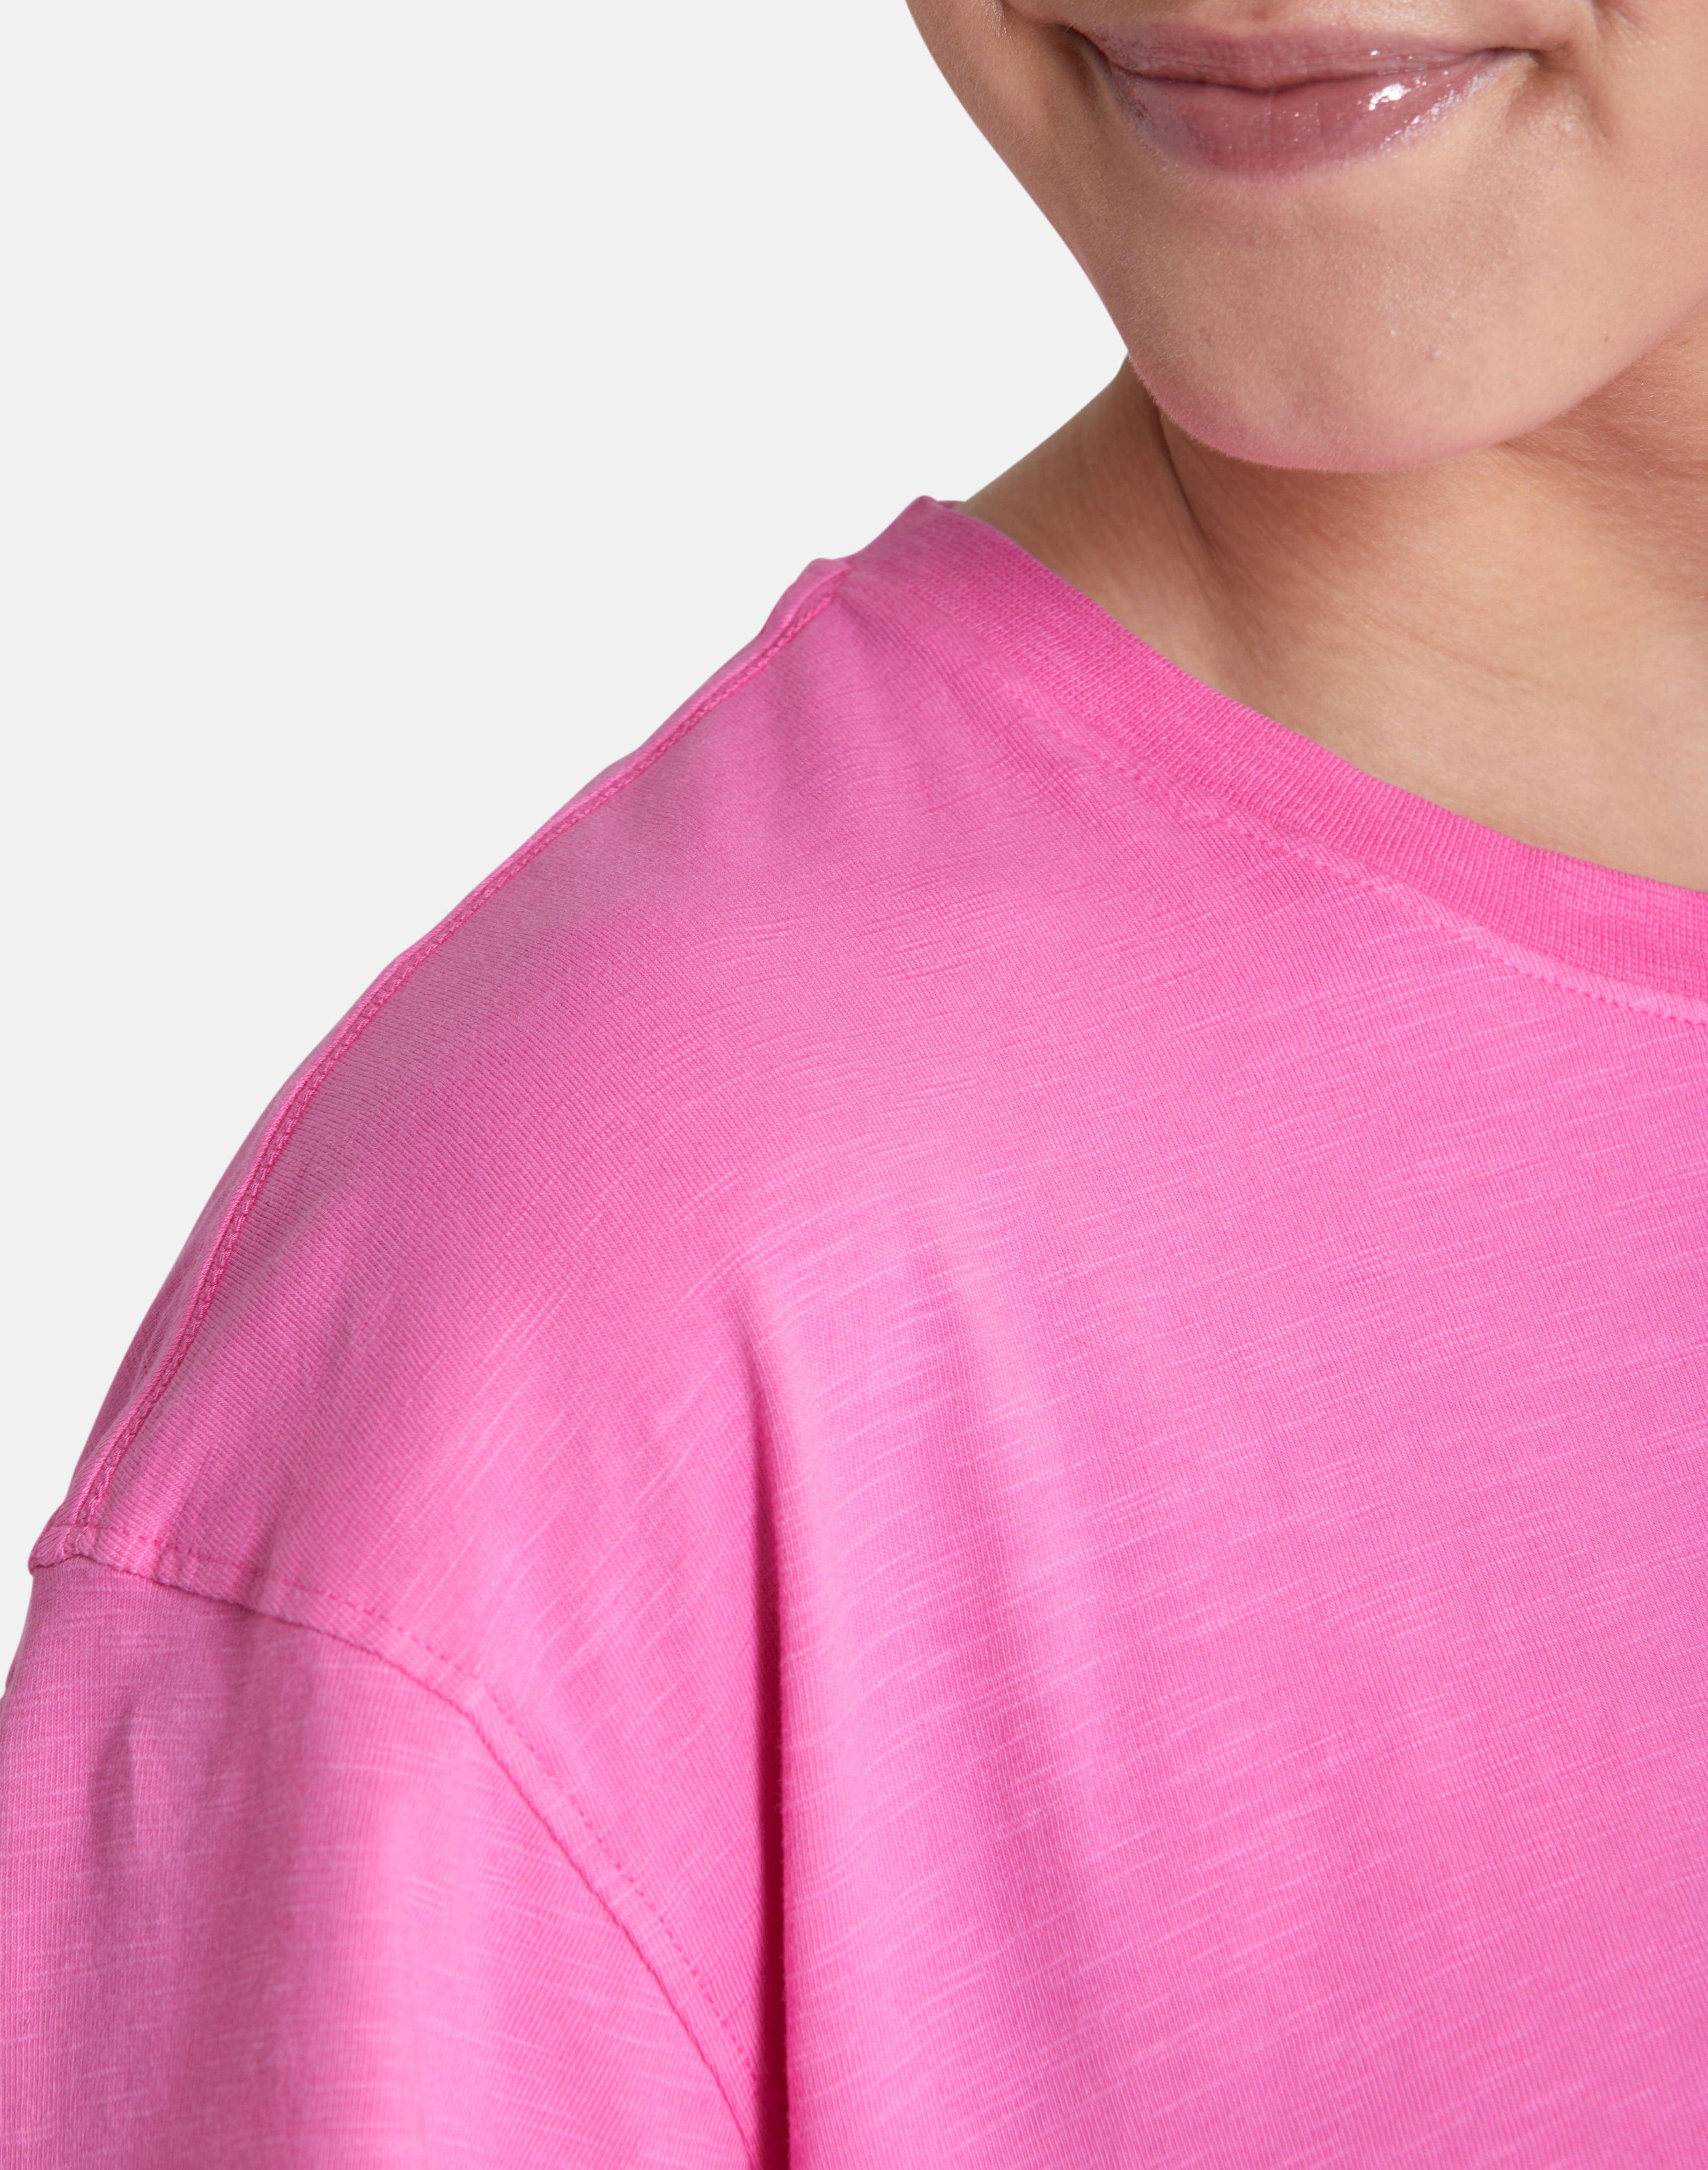 Essential Crop Tee In Empower Pink - T-Shirts - Gym+Coffee IE